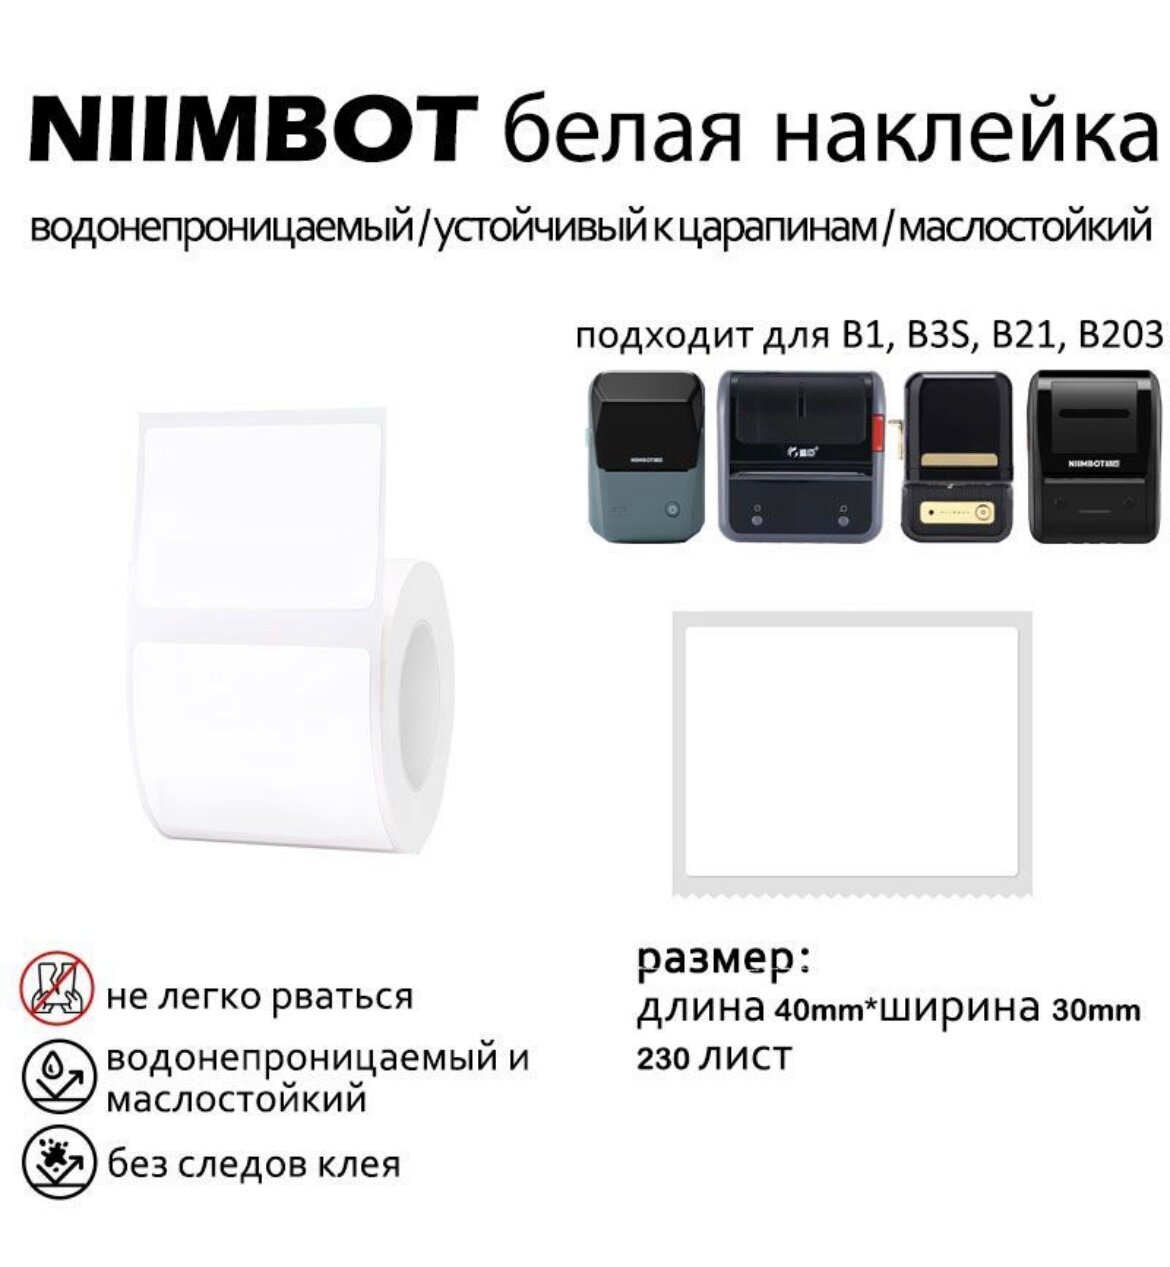 Niimbot этикетки, размер 40x30